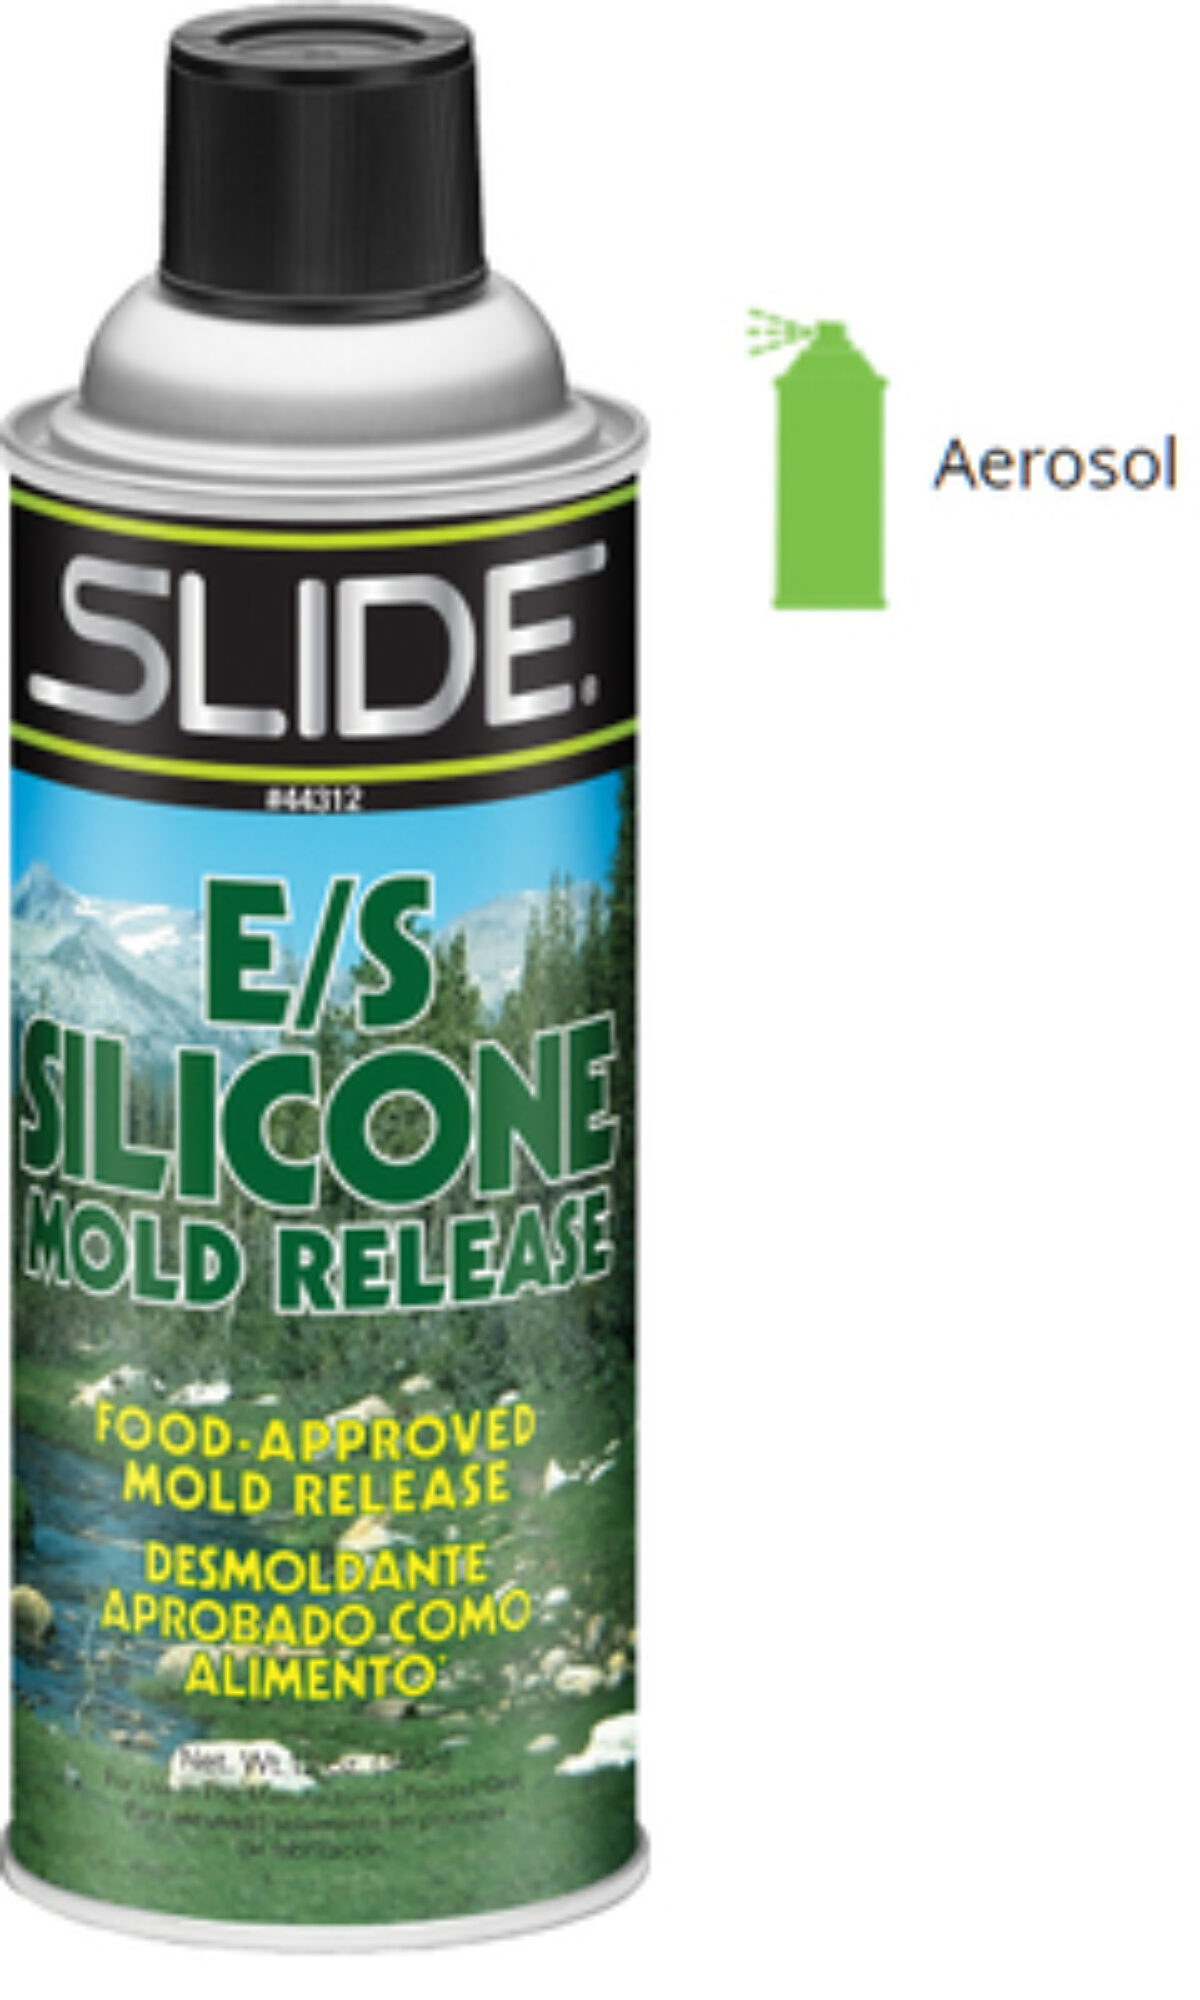 SLIDE® Regular Silicone Mold Release No. 40112